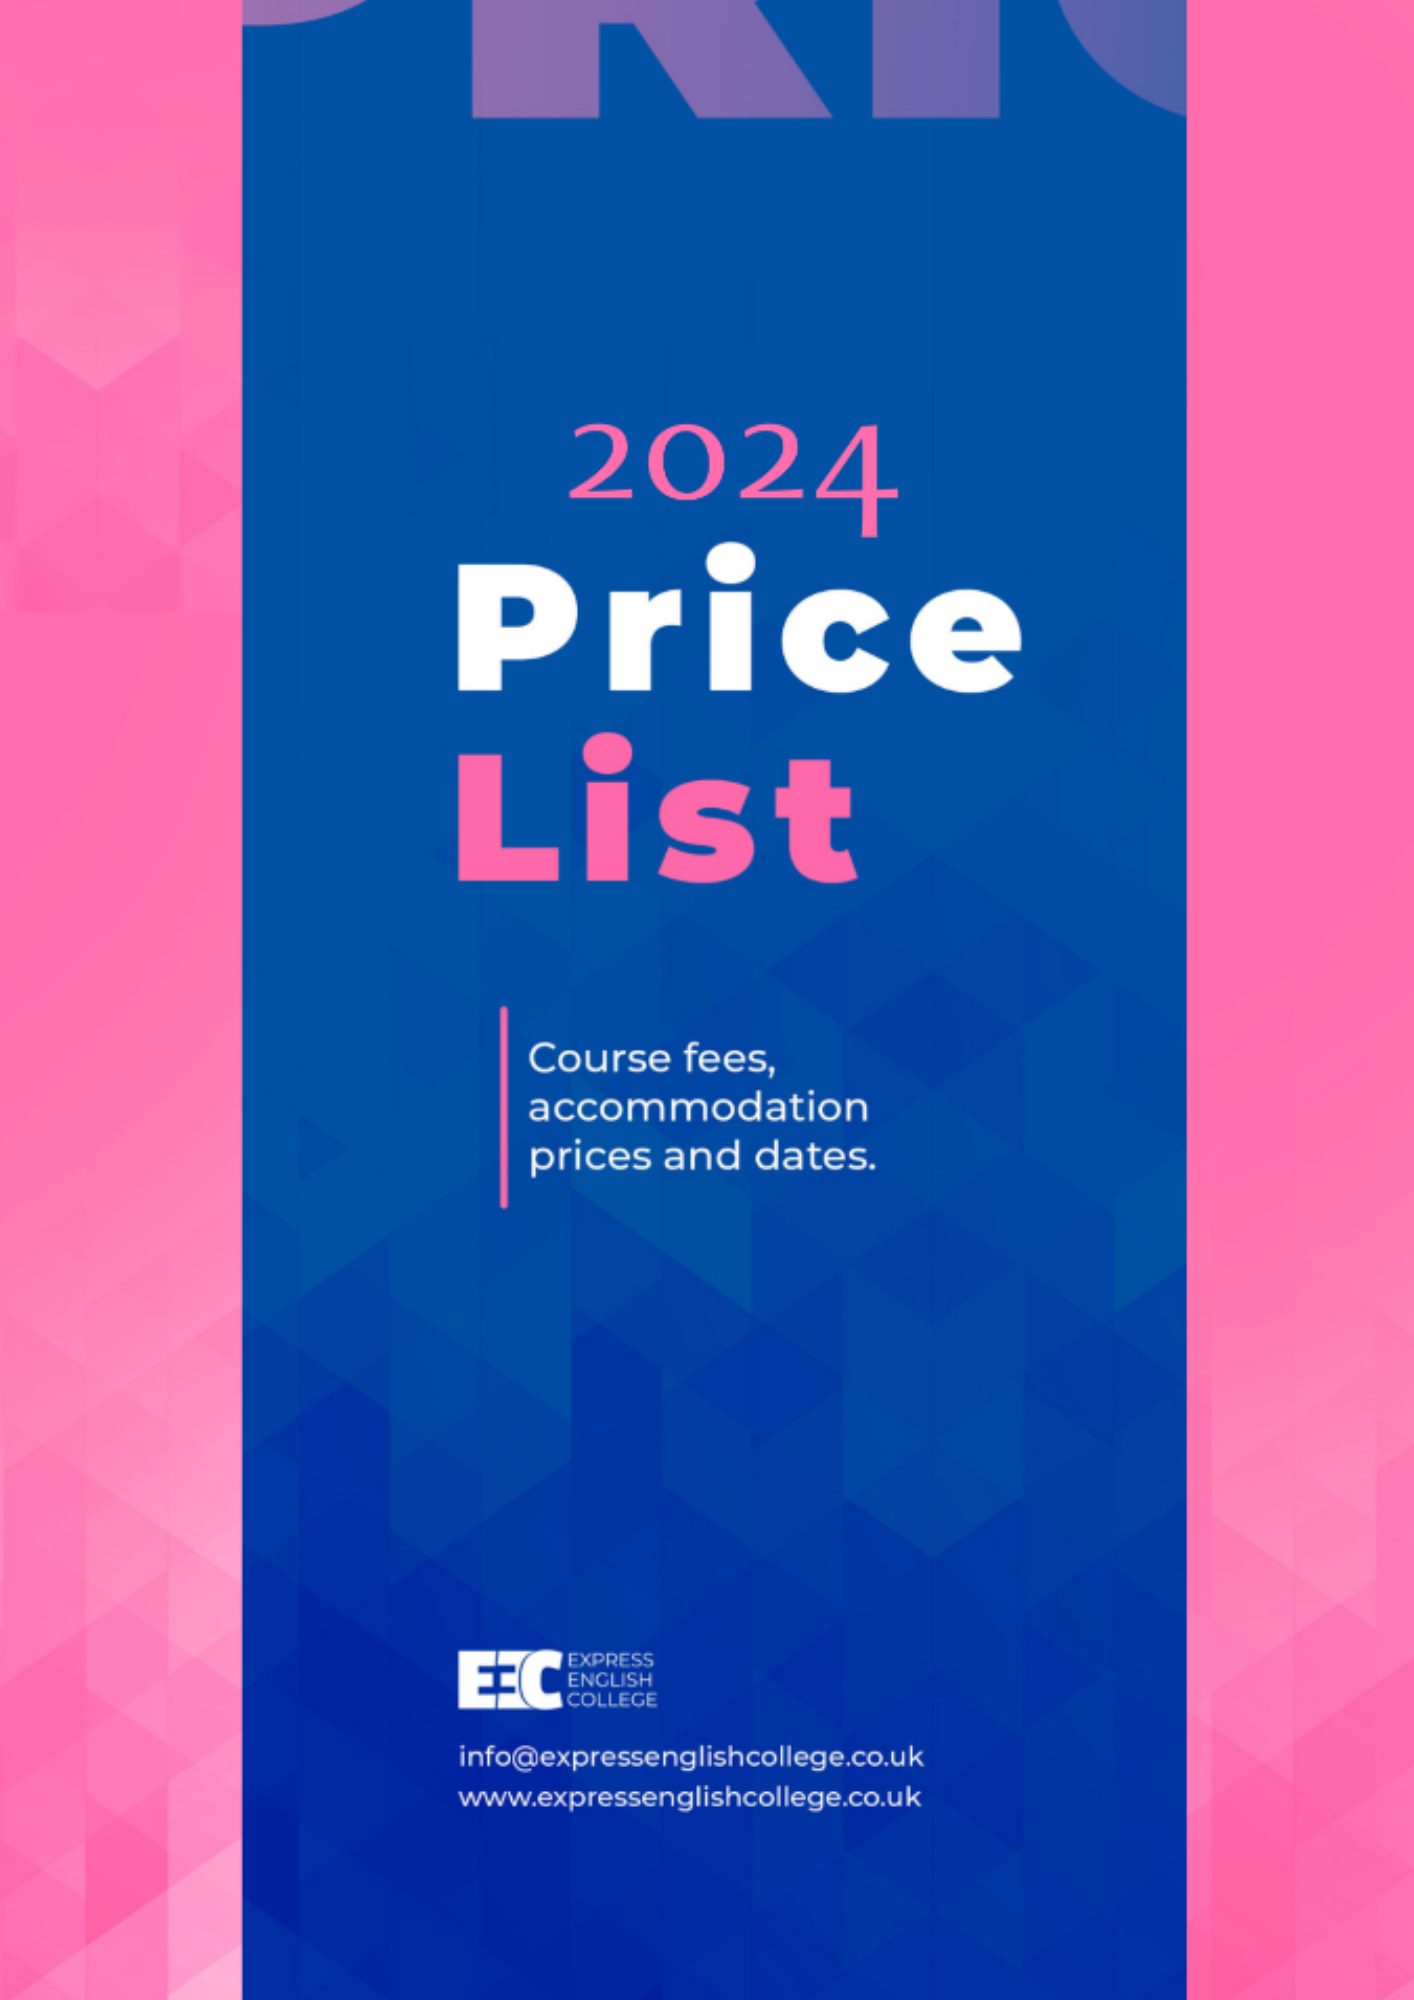 EEC Price List 2023